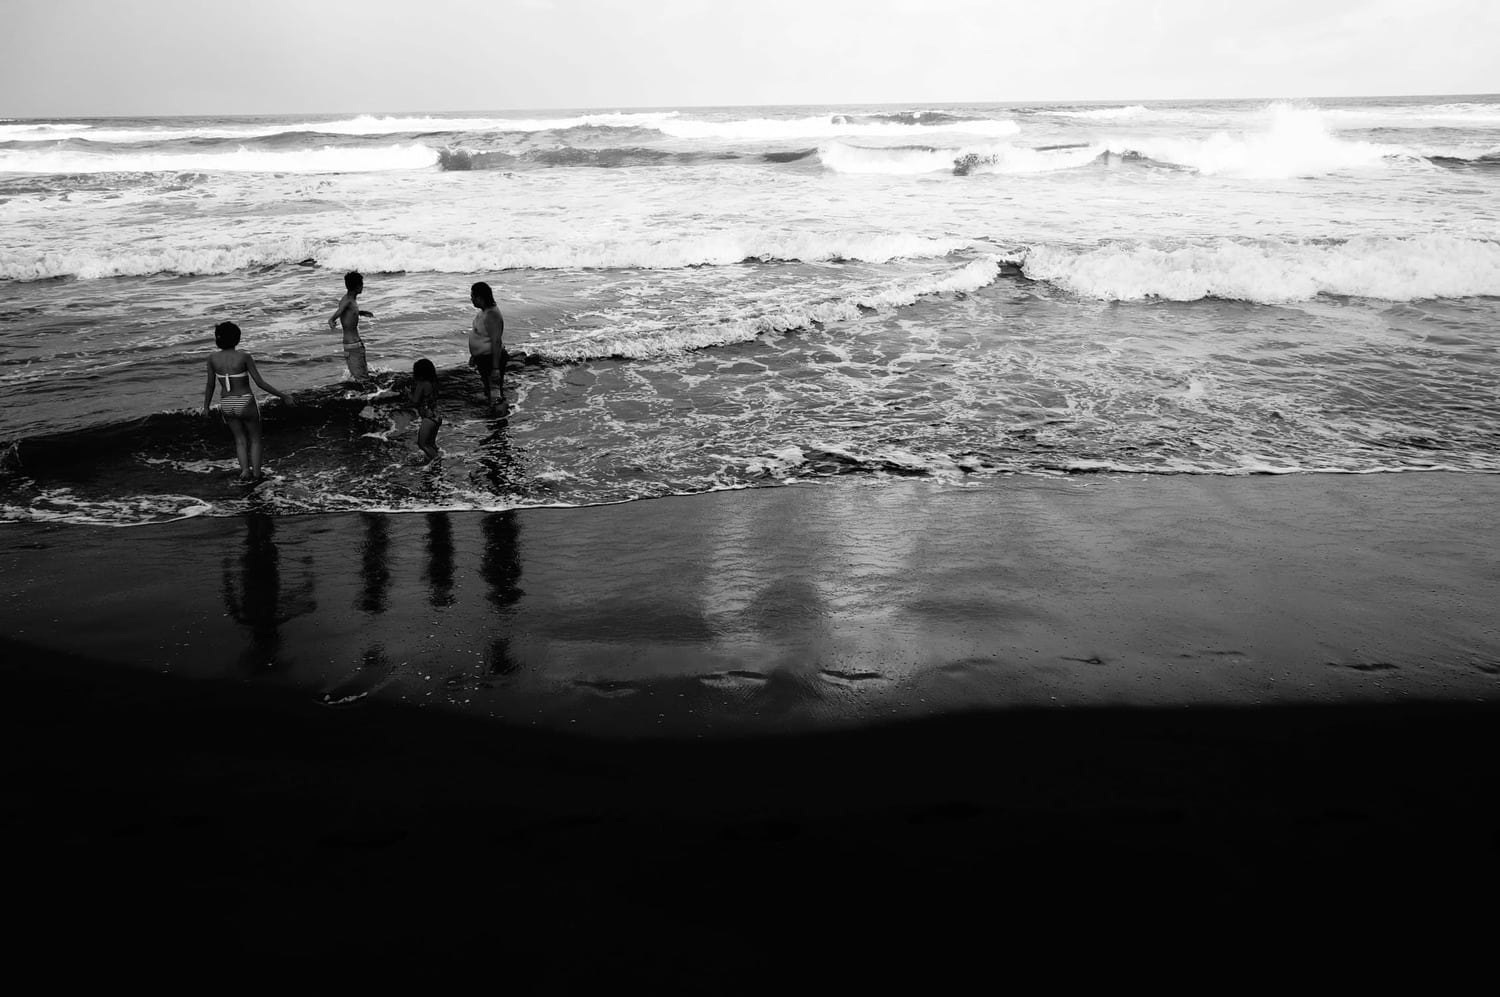 costa rica,children, black and white, world'schildren, street photography, art